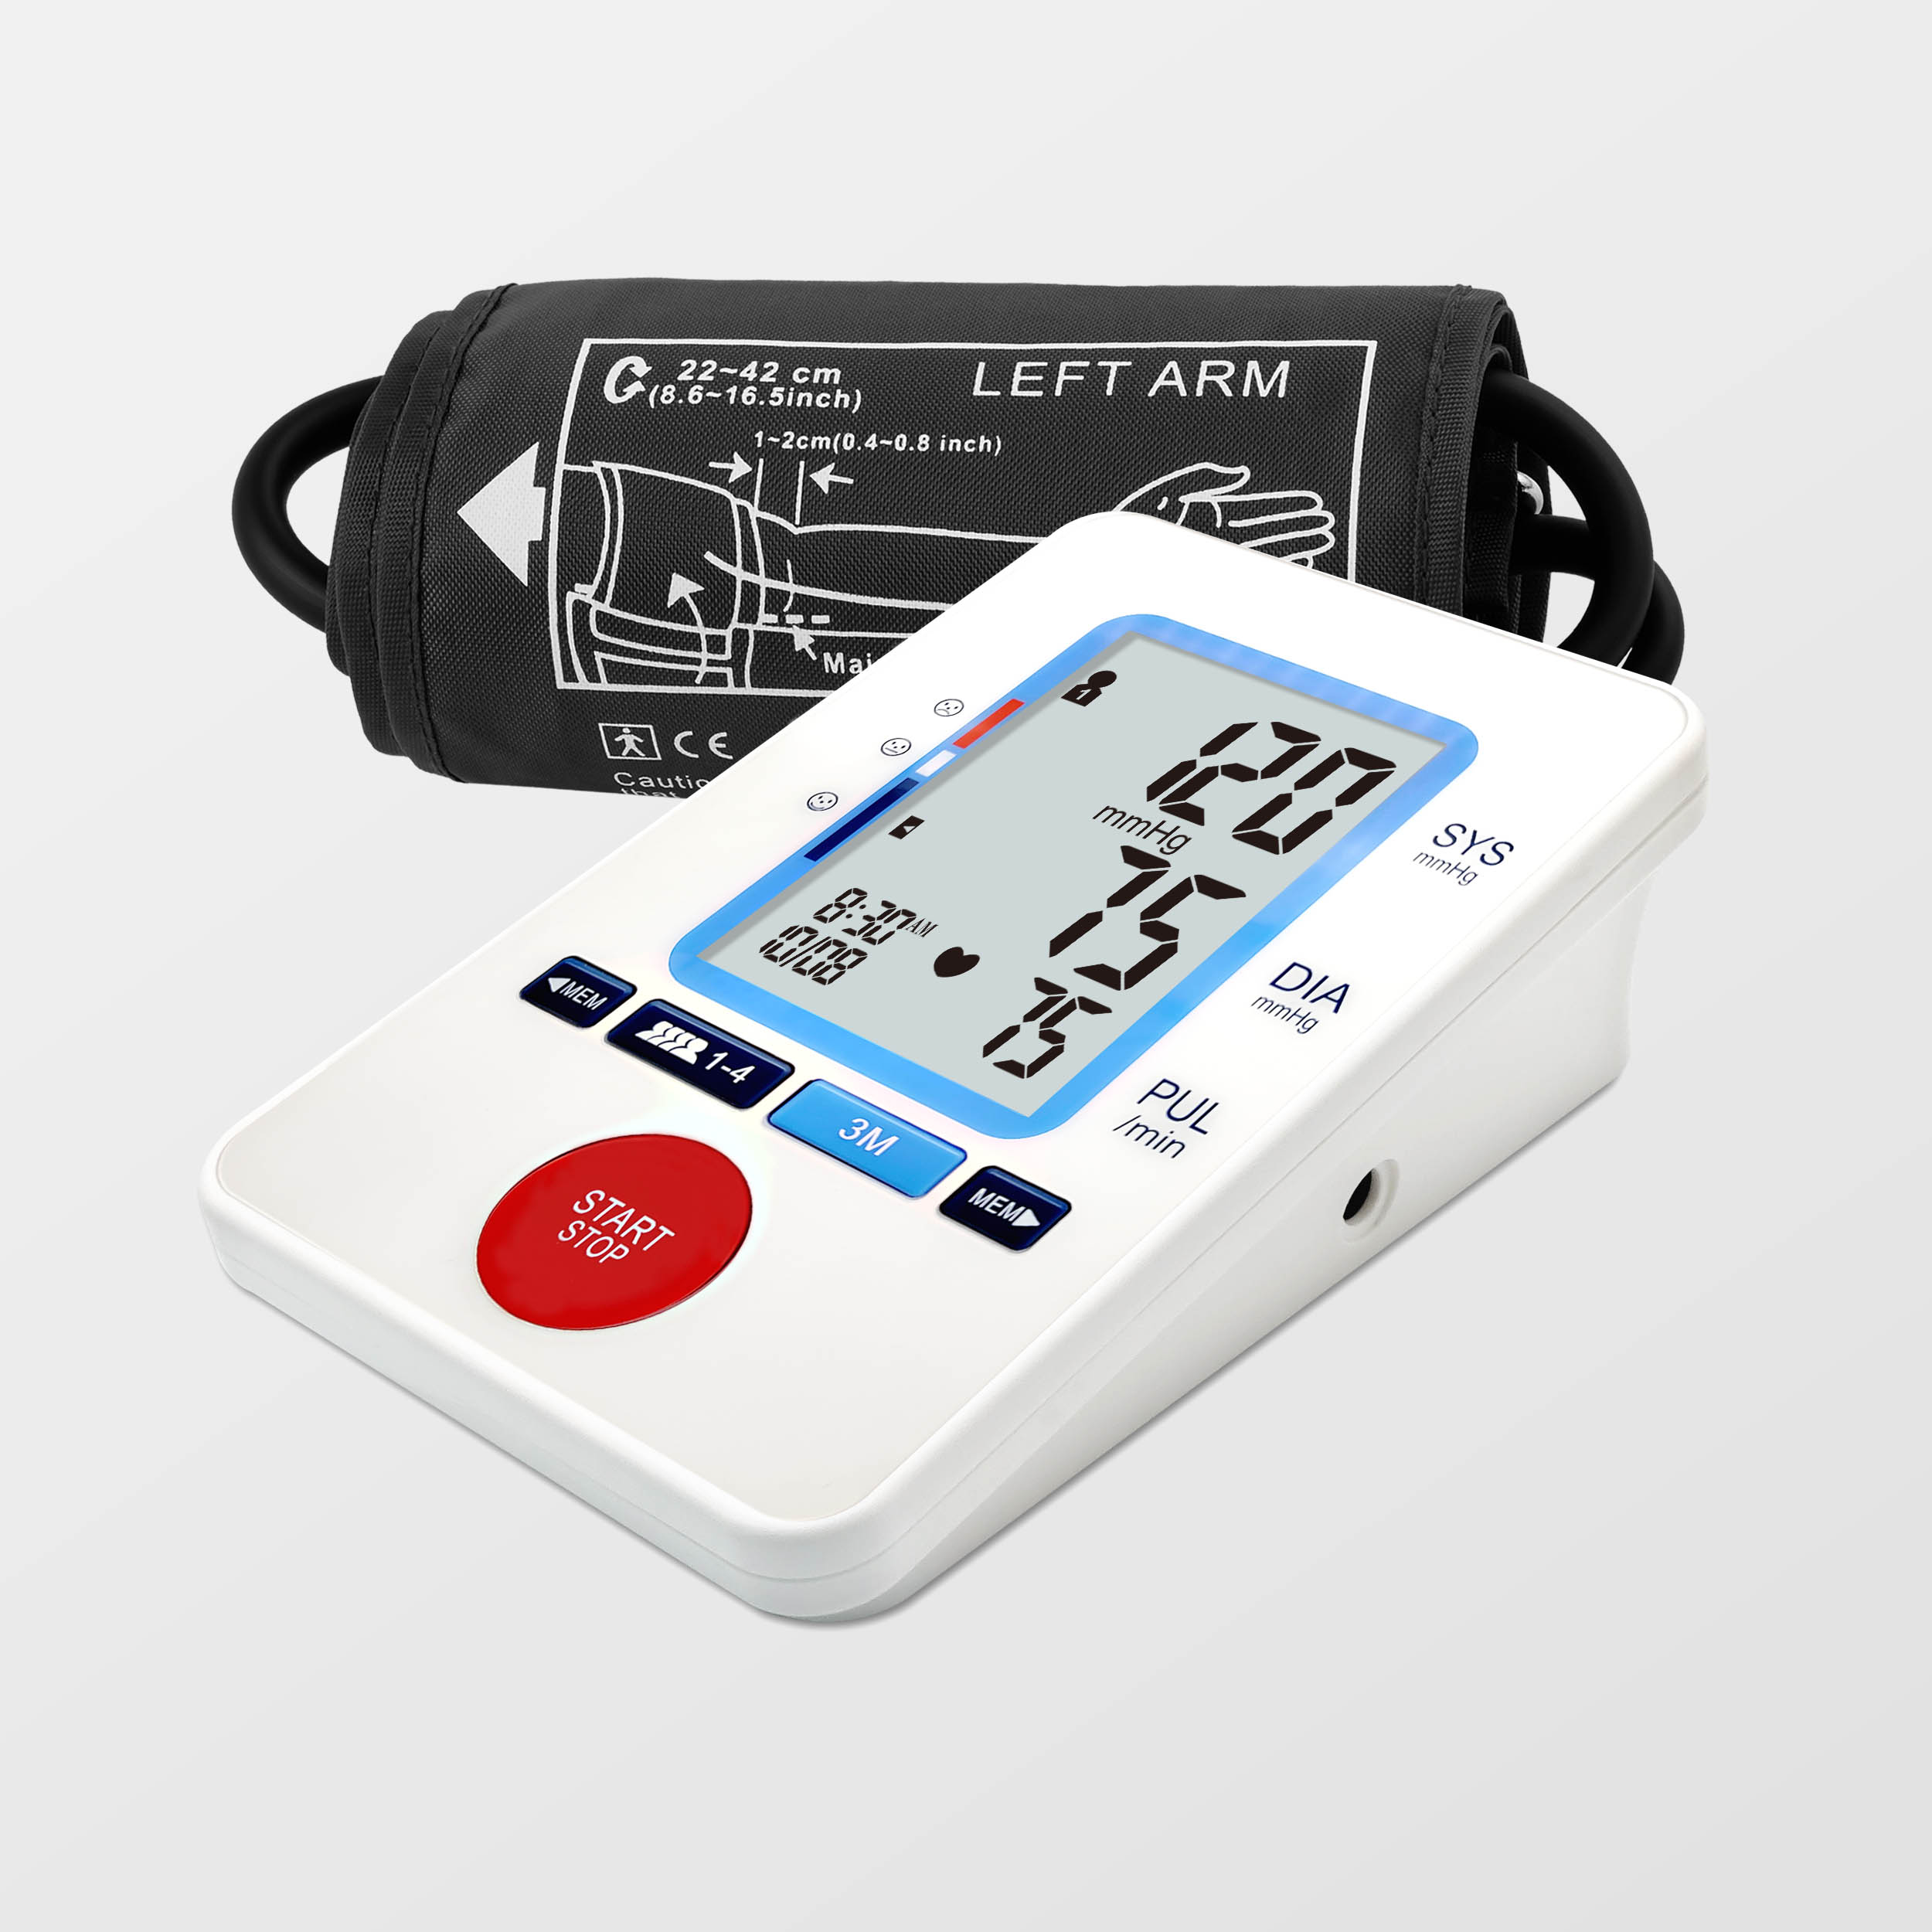 ROHS REACH Approved Upper Arm Blood Pressure Monitor Digital Tensiometro Bluetooth